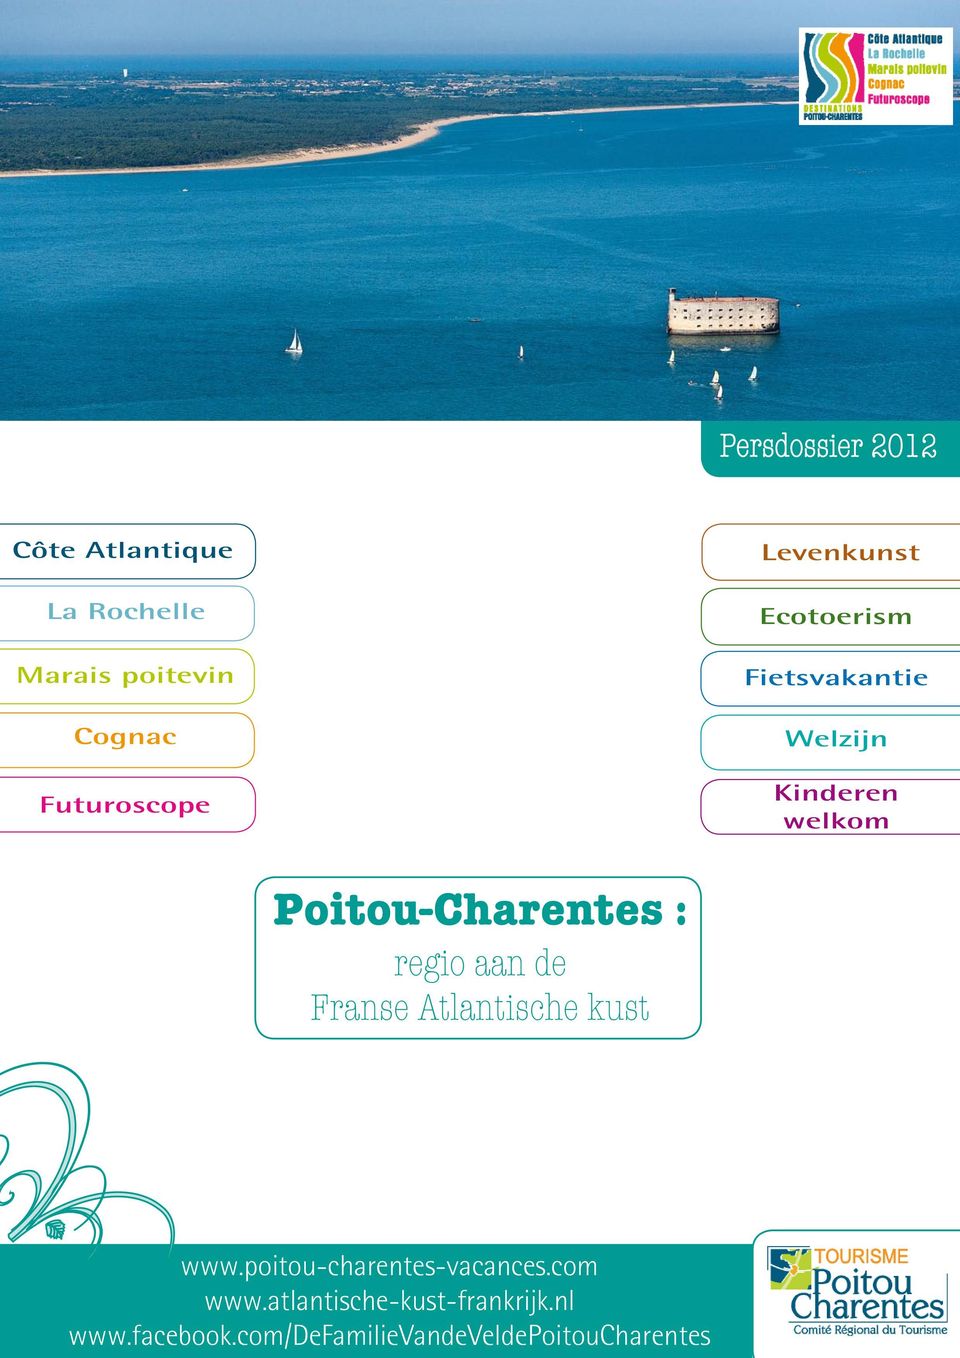 Poitou-Charentes : regio aan de Franse Atlantische kust www.